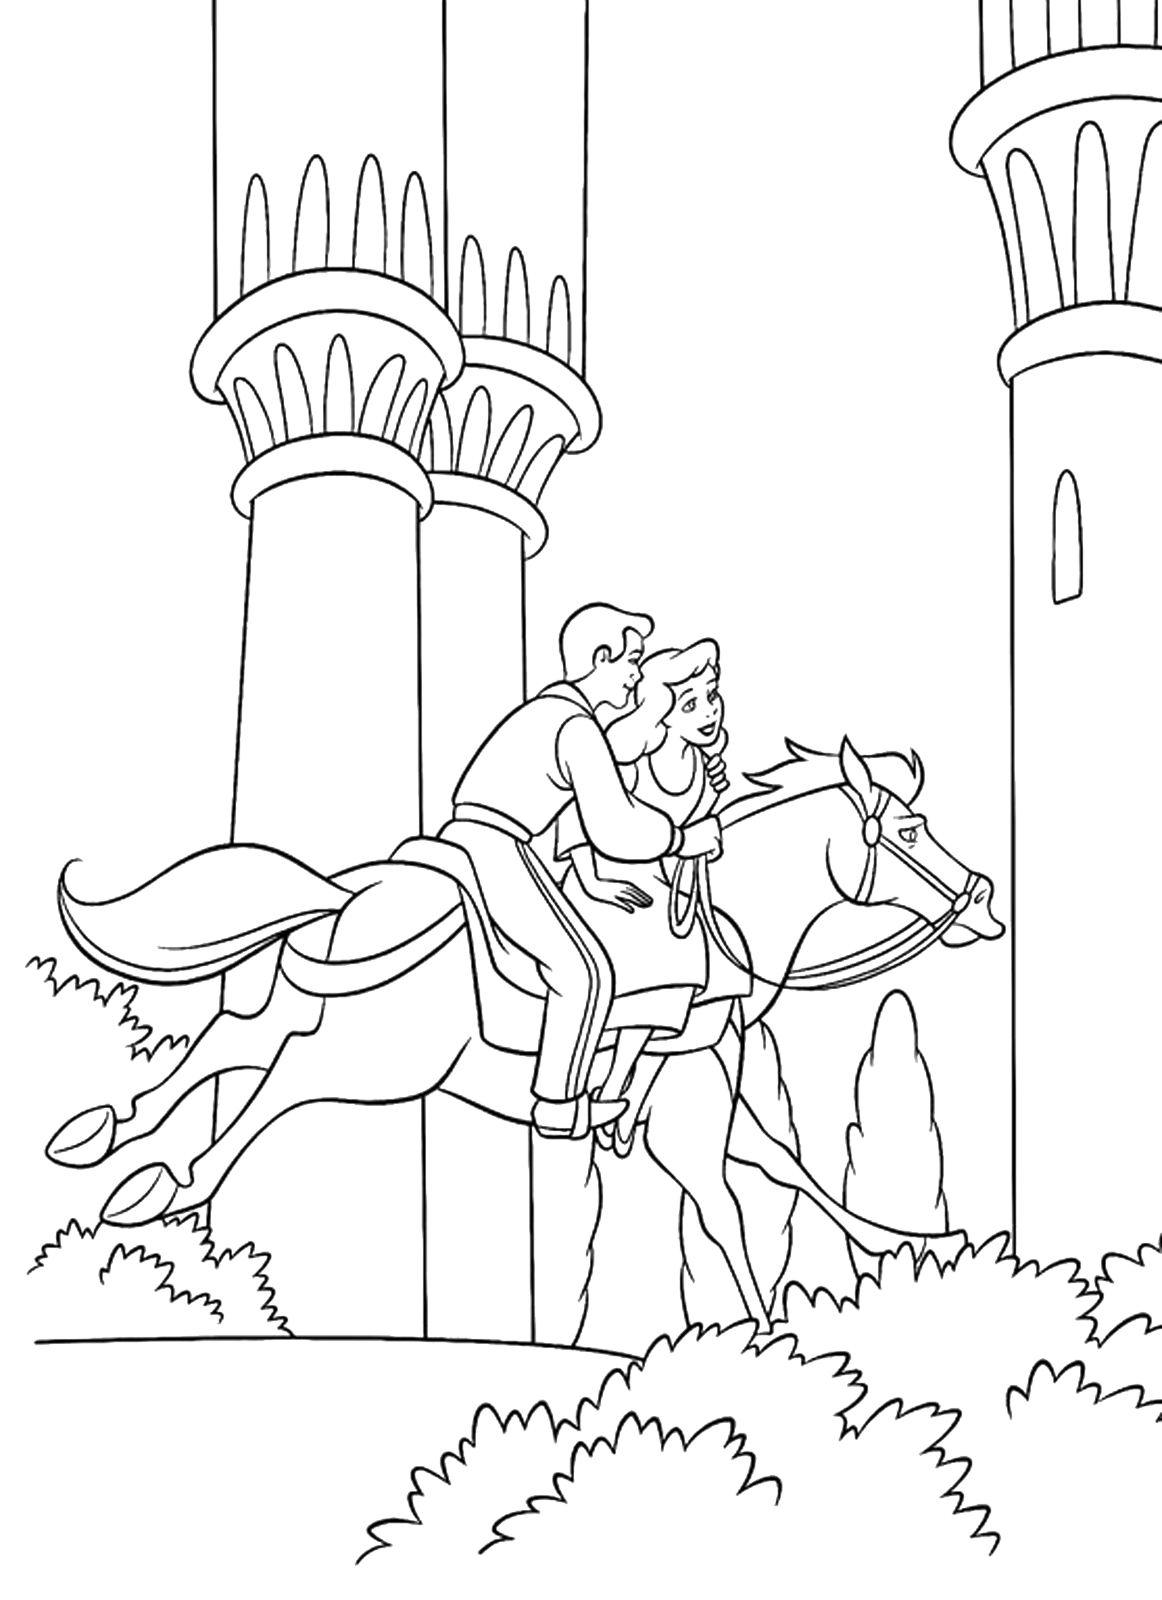 Cenerentola - Il Principe porta Cenerentola a cavallo